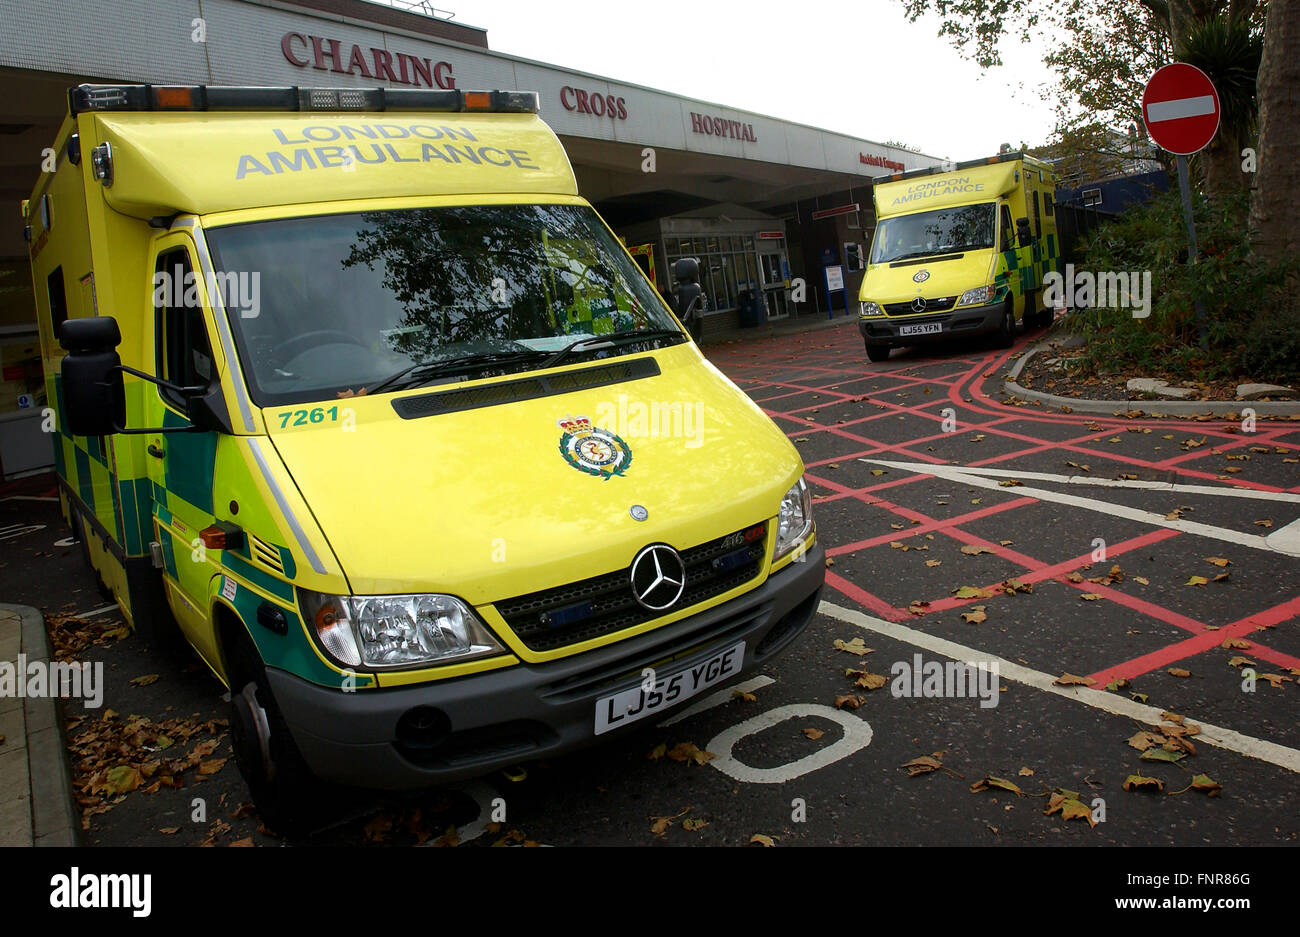 Ambulance entrance to Charing Cross Hospital, London. Stock Photo